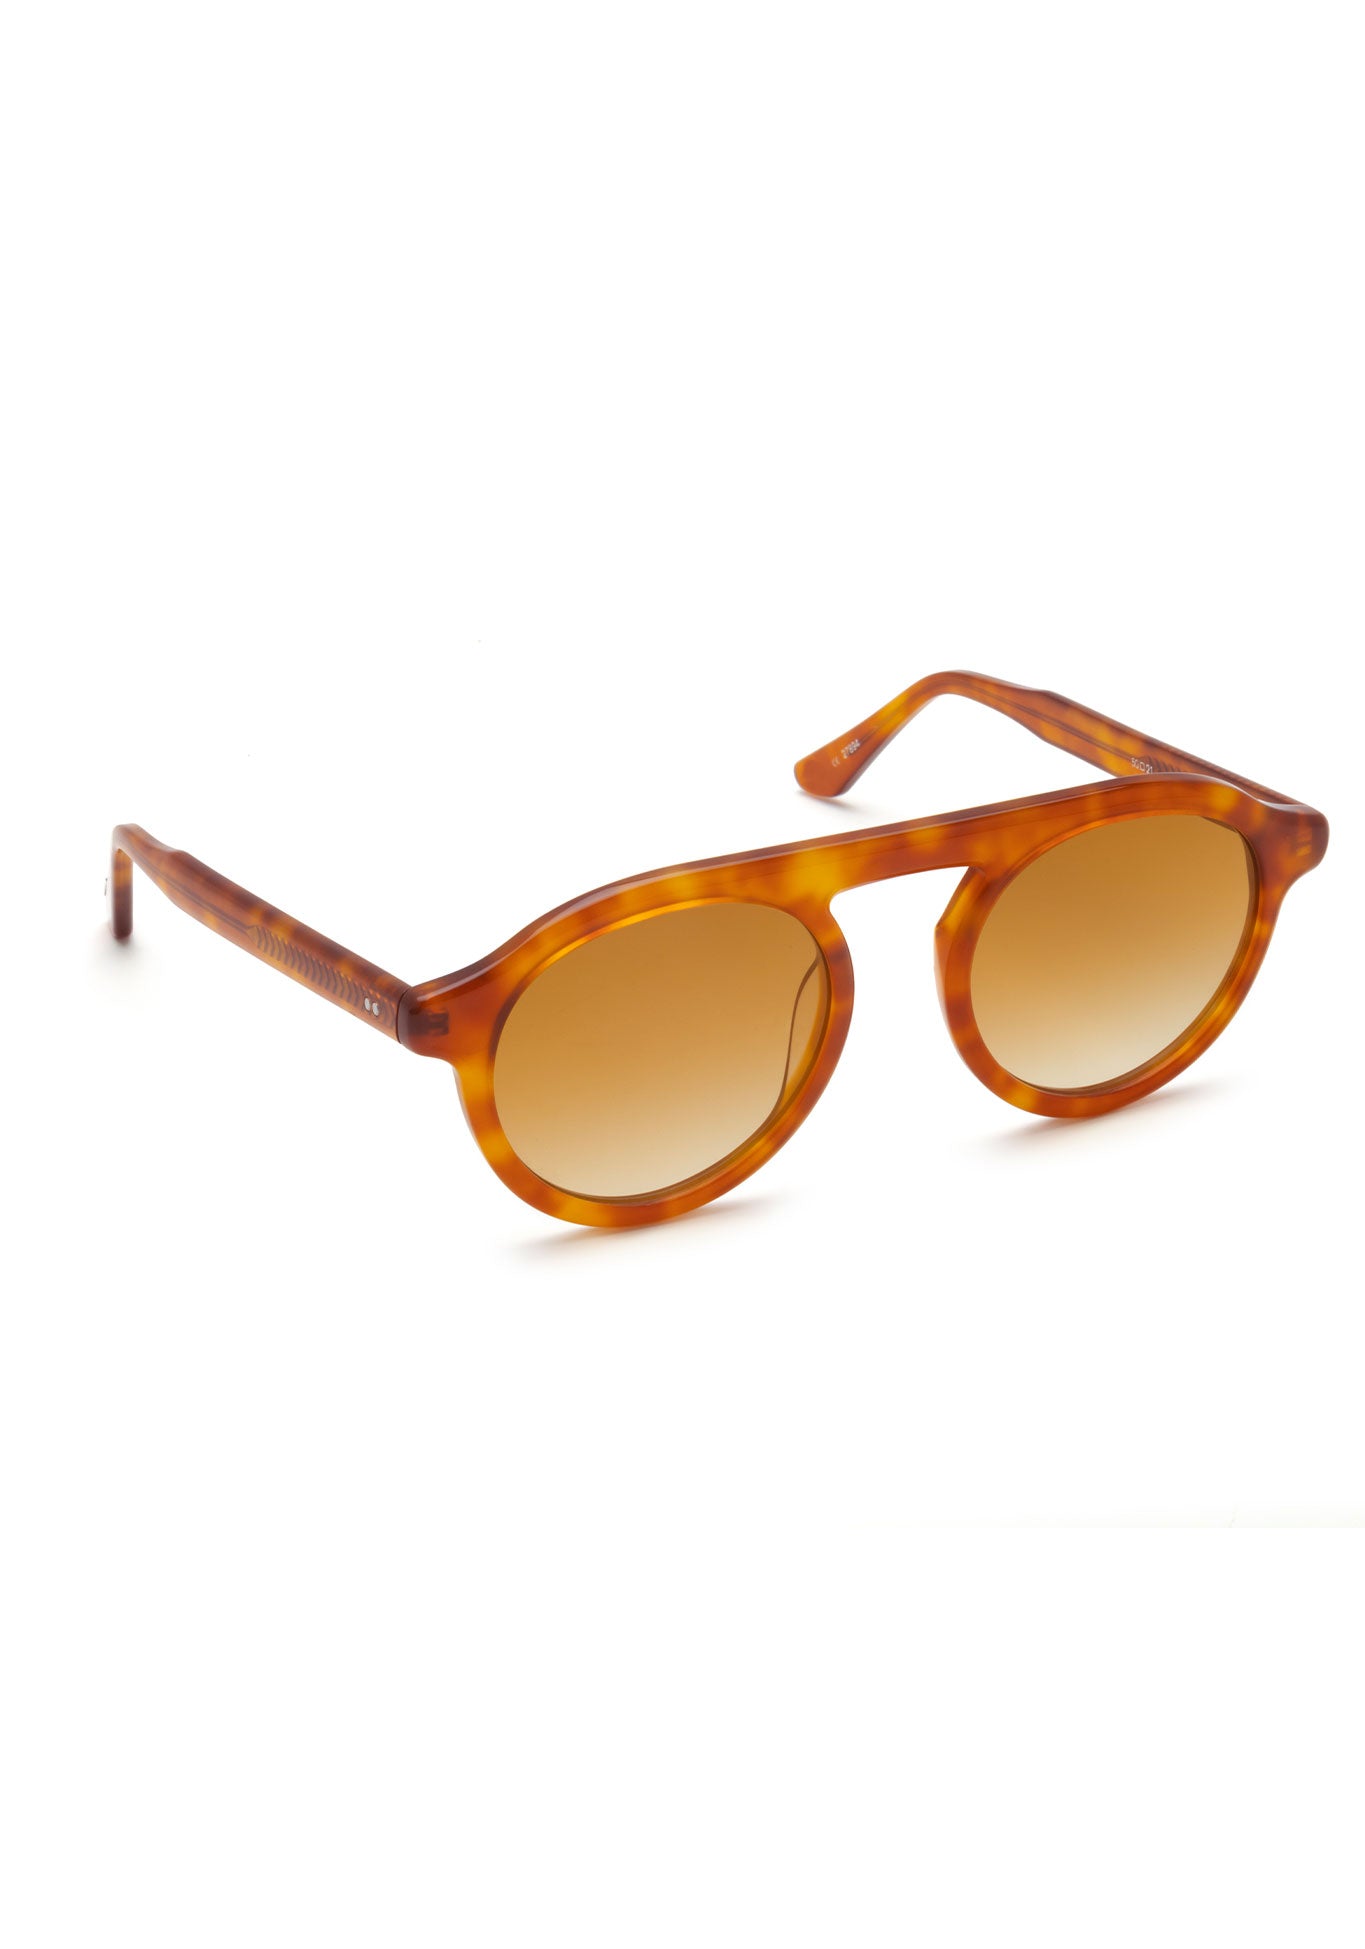 KREWE SUNGLASSES - CAMERON | Amaro + Custom Vanity Tint handcrafted, luxury orange round sunglasses with custom orange gradient tinted lenses